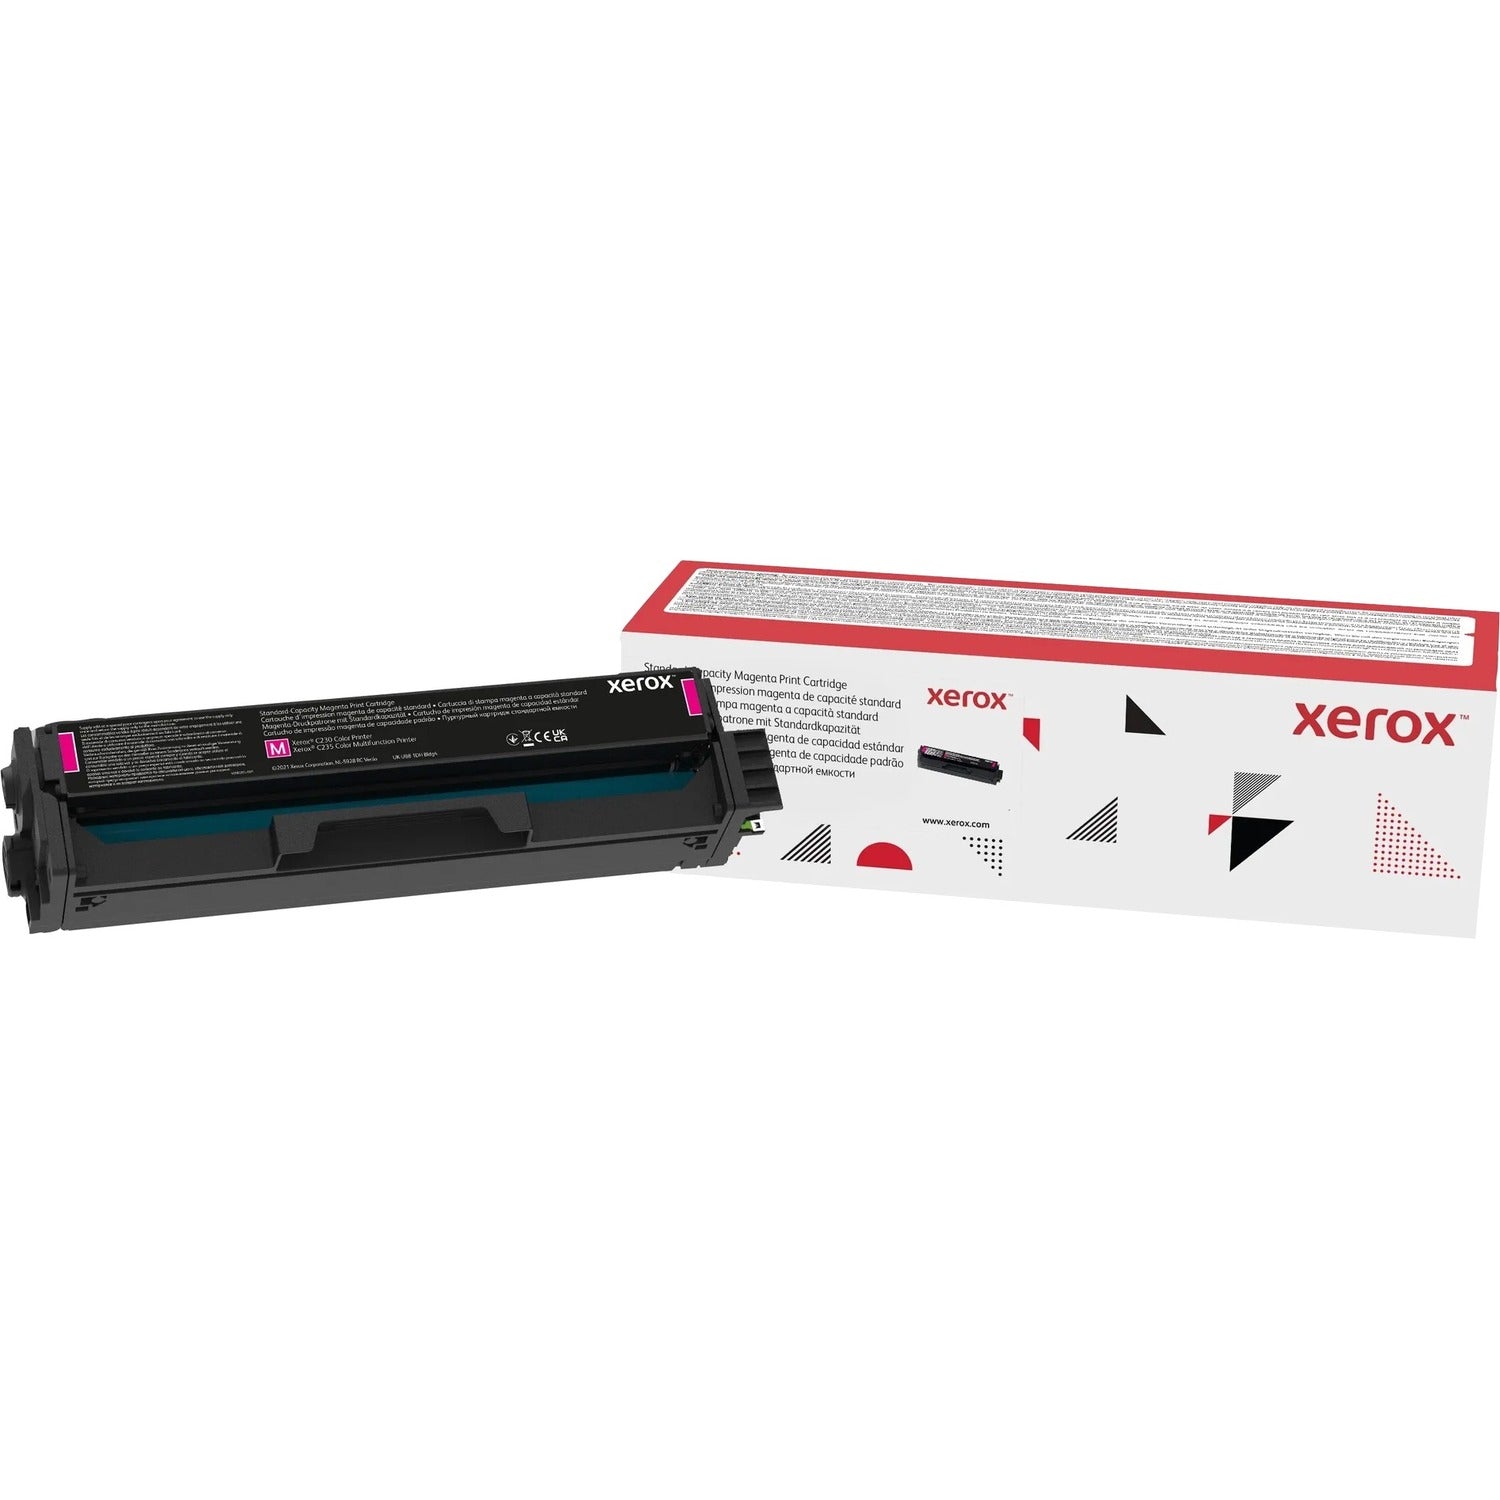 Xerox Original Standard Yield Laser Toner Cartridge - Magenta - 1 Pack